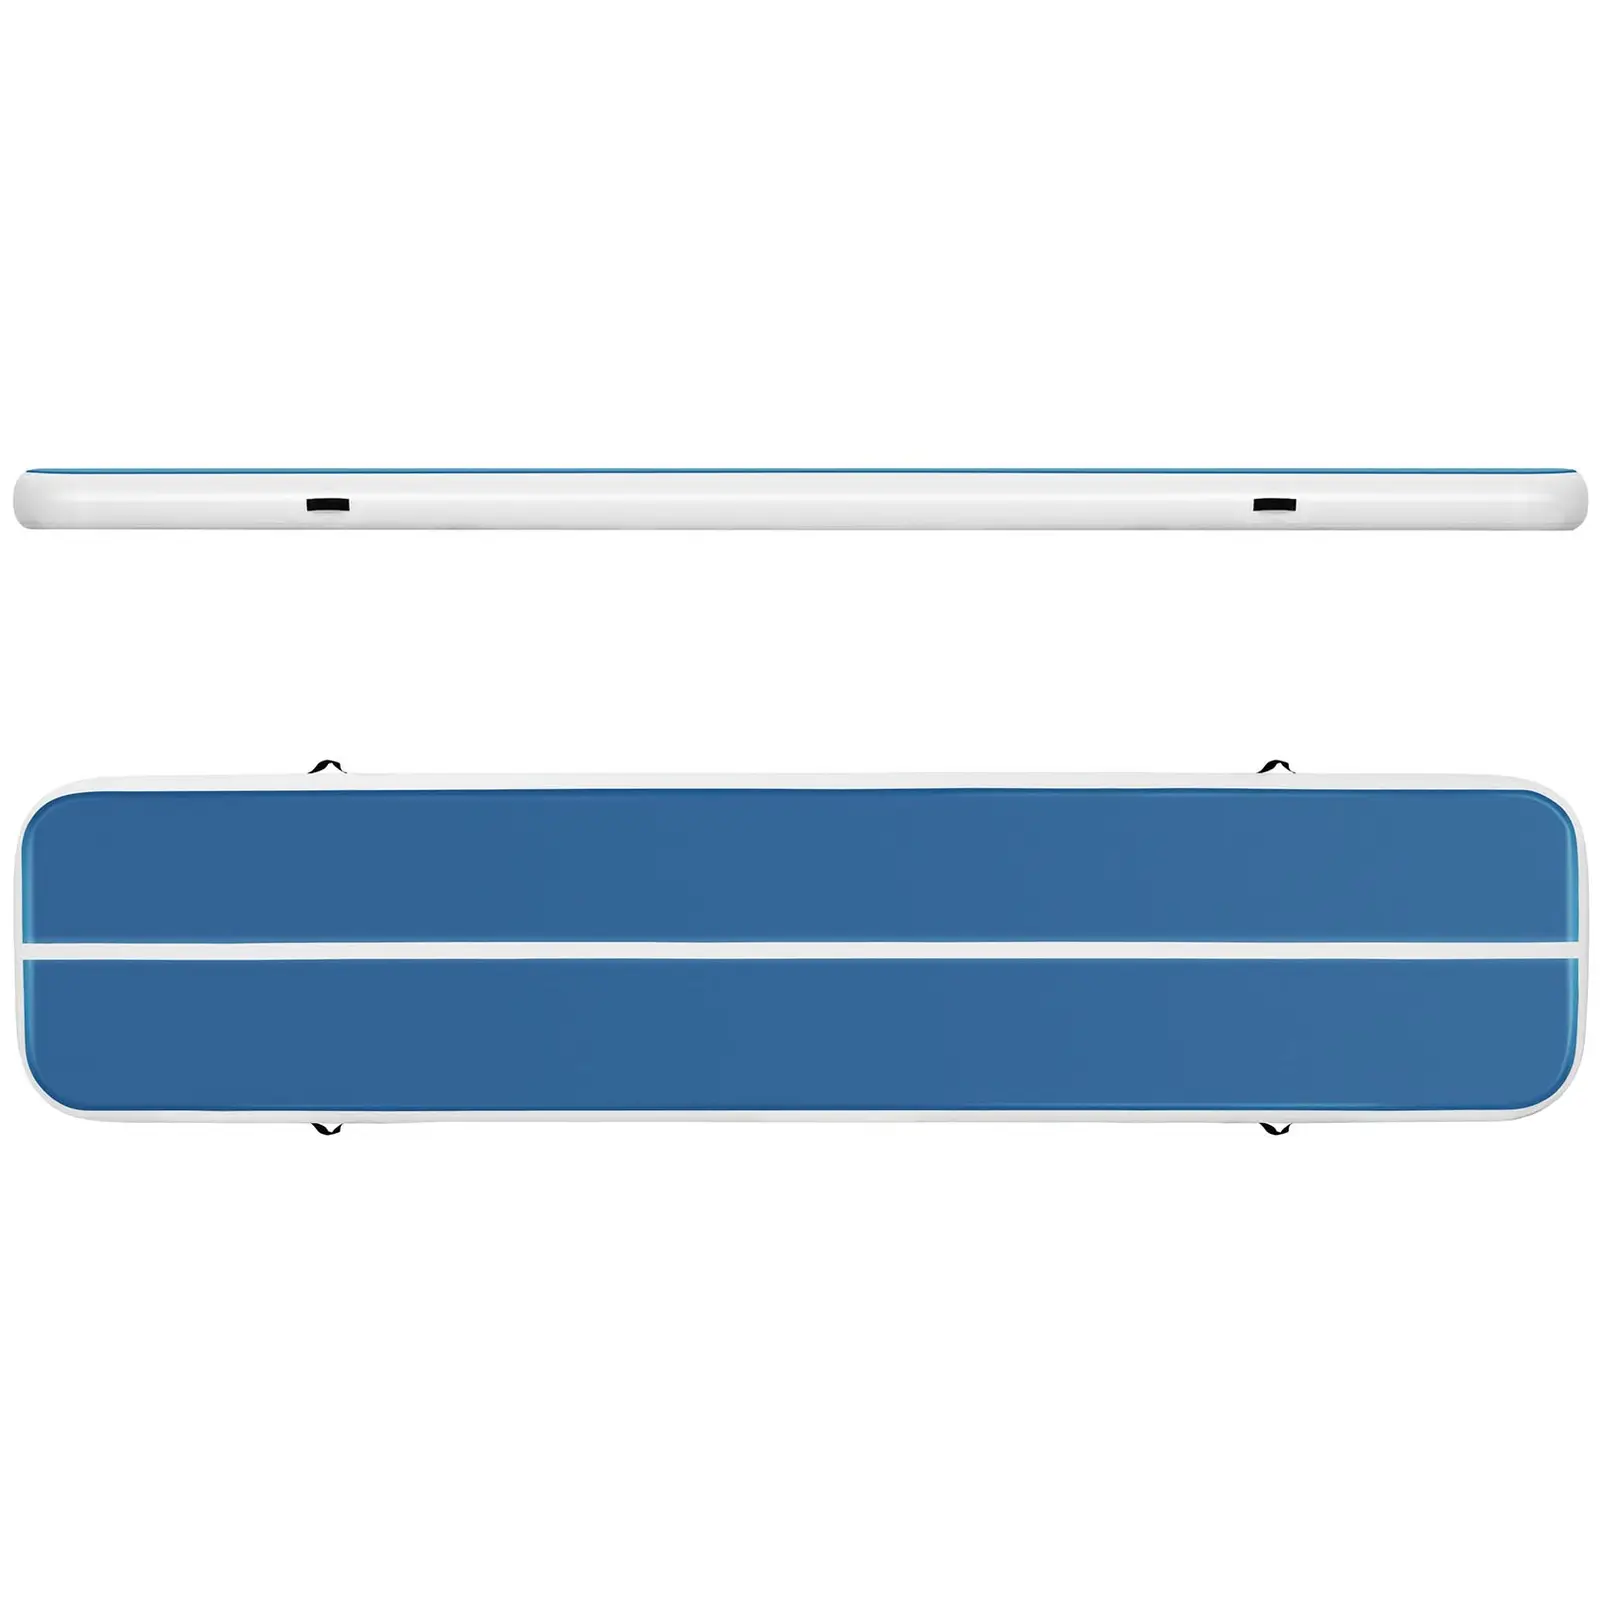 Set Aufblasbare Turnmatte inklusive Luftpumpe - 500 x 100 x 20 cm - 250 kg - blau/weiß